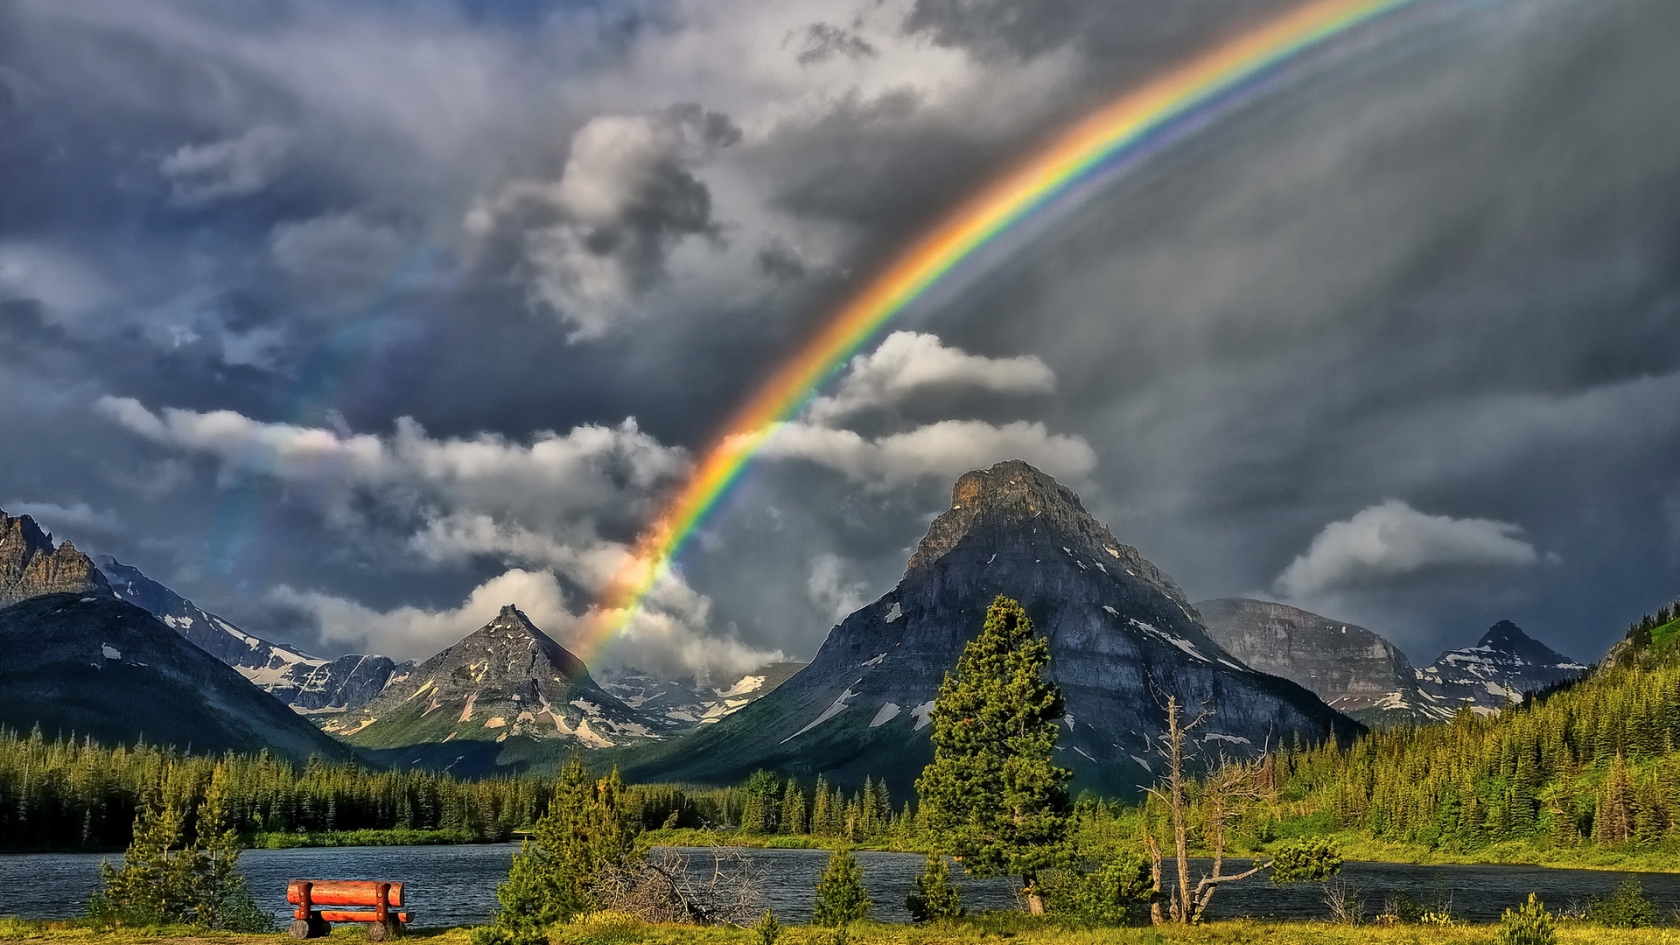 Huge Rainbow for 1680 x 945 HDTV resolution